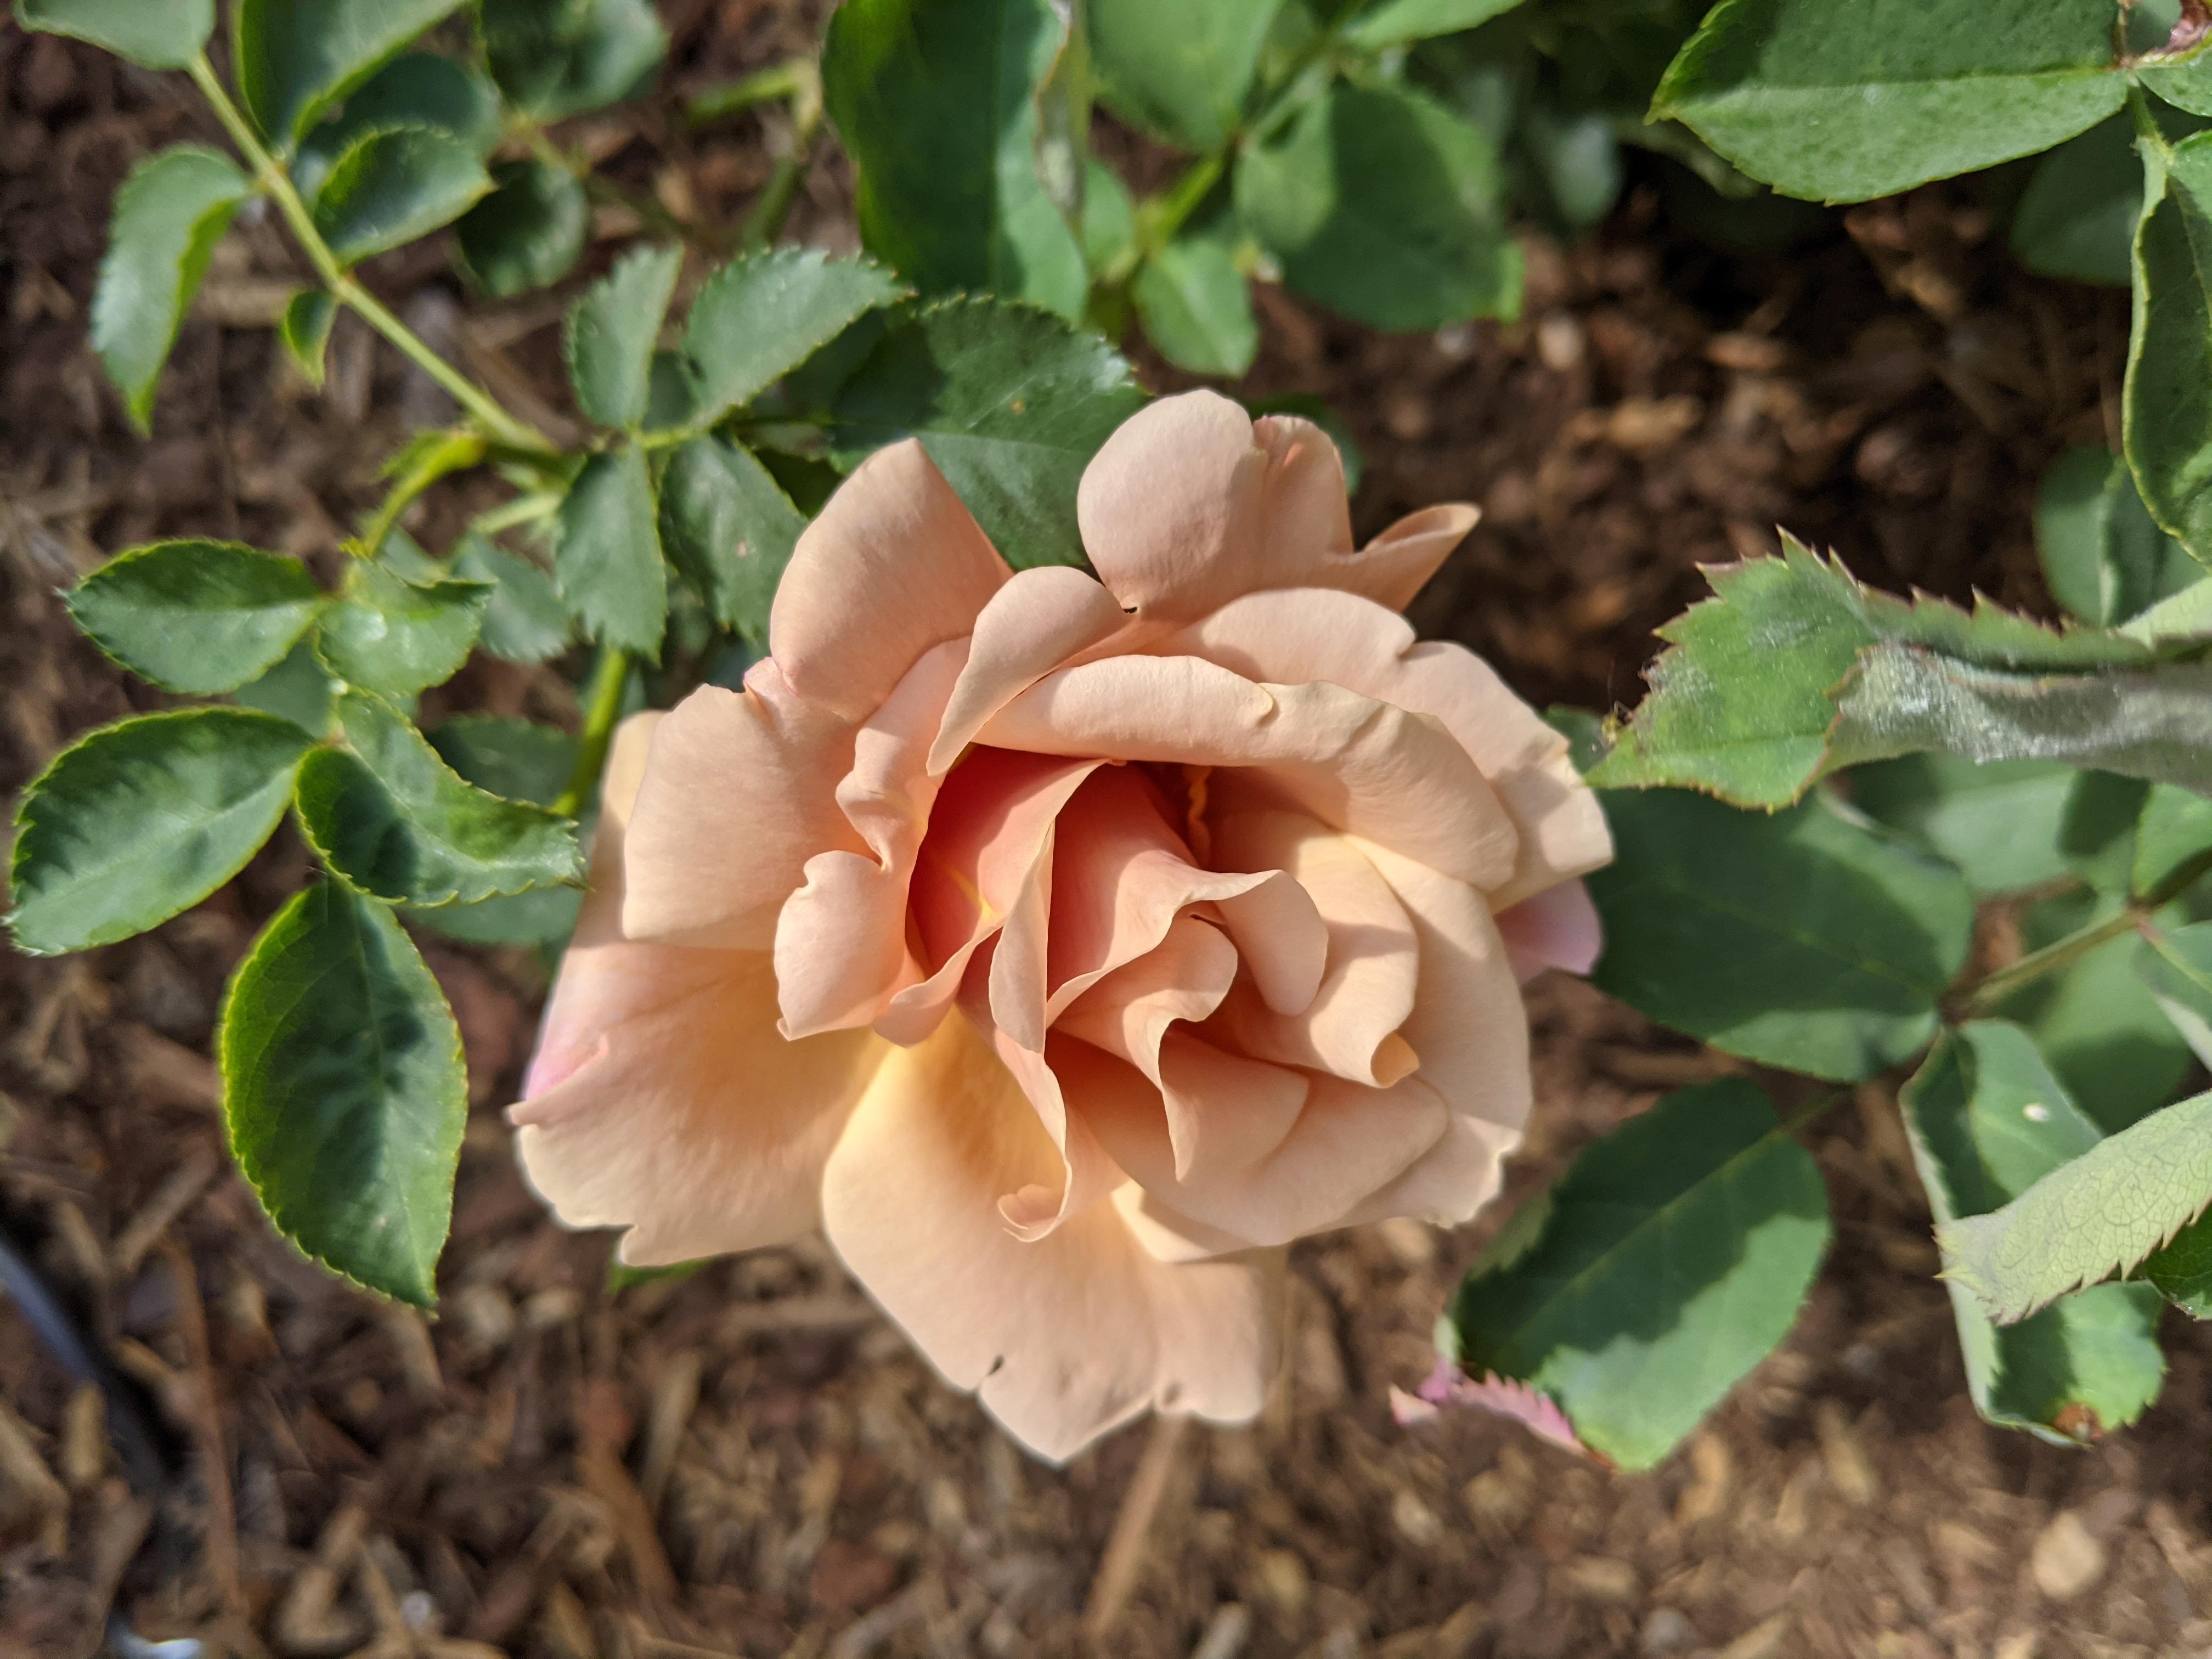 Connie's Sandstorm rose